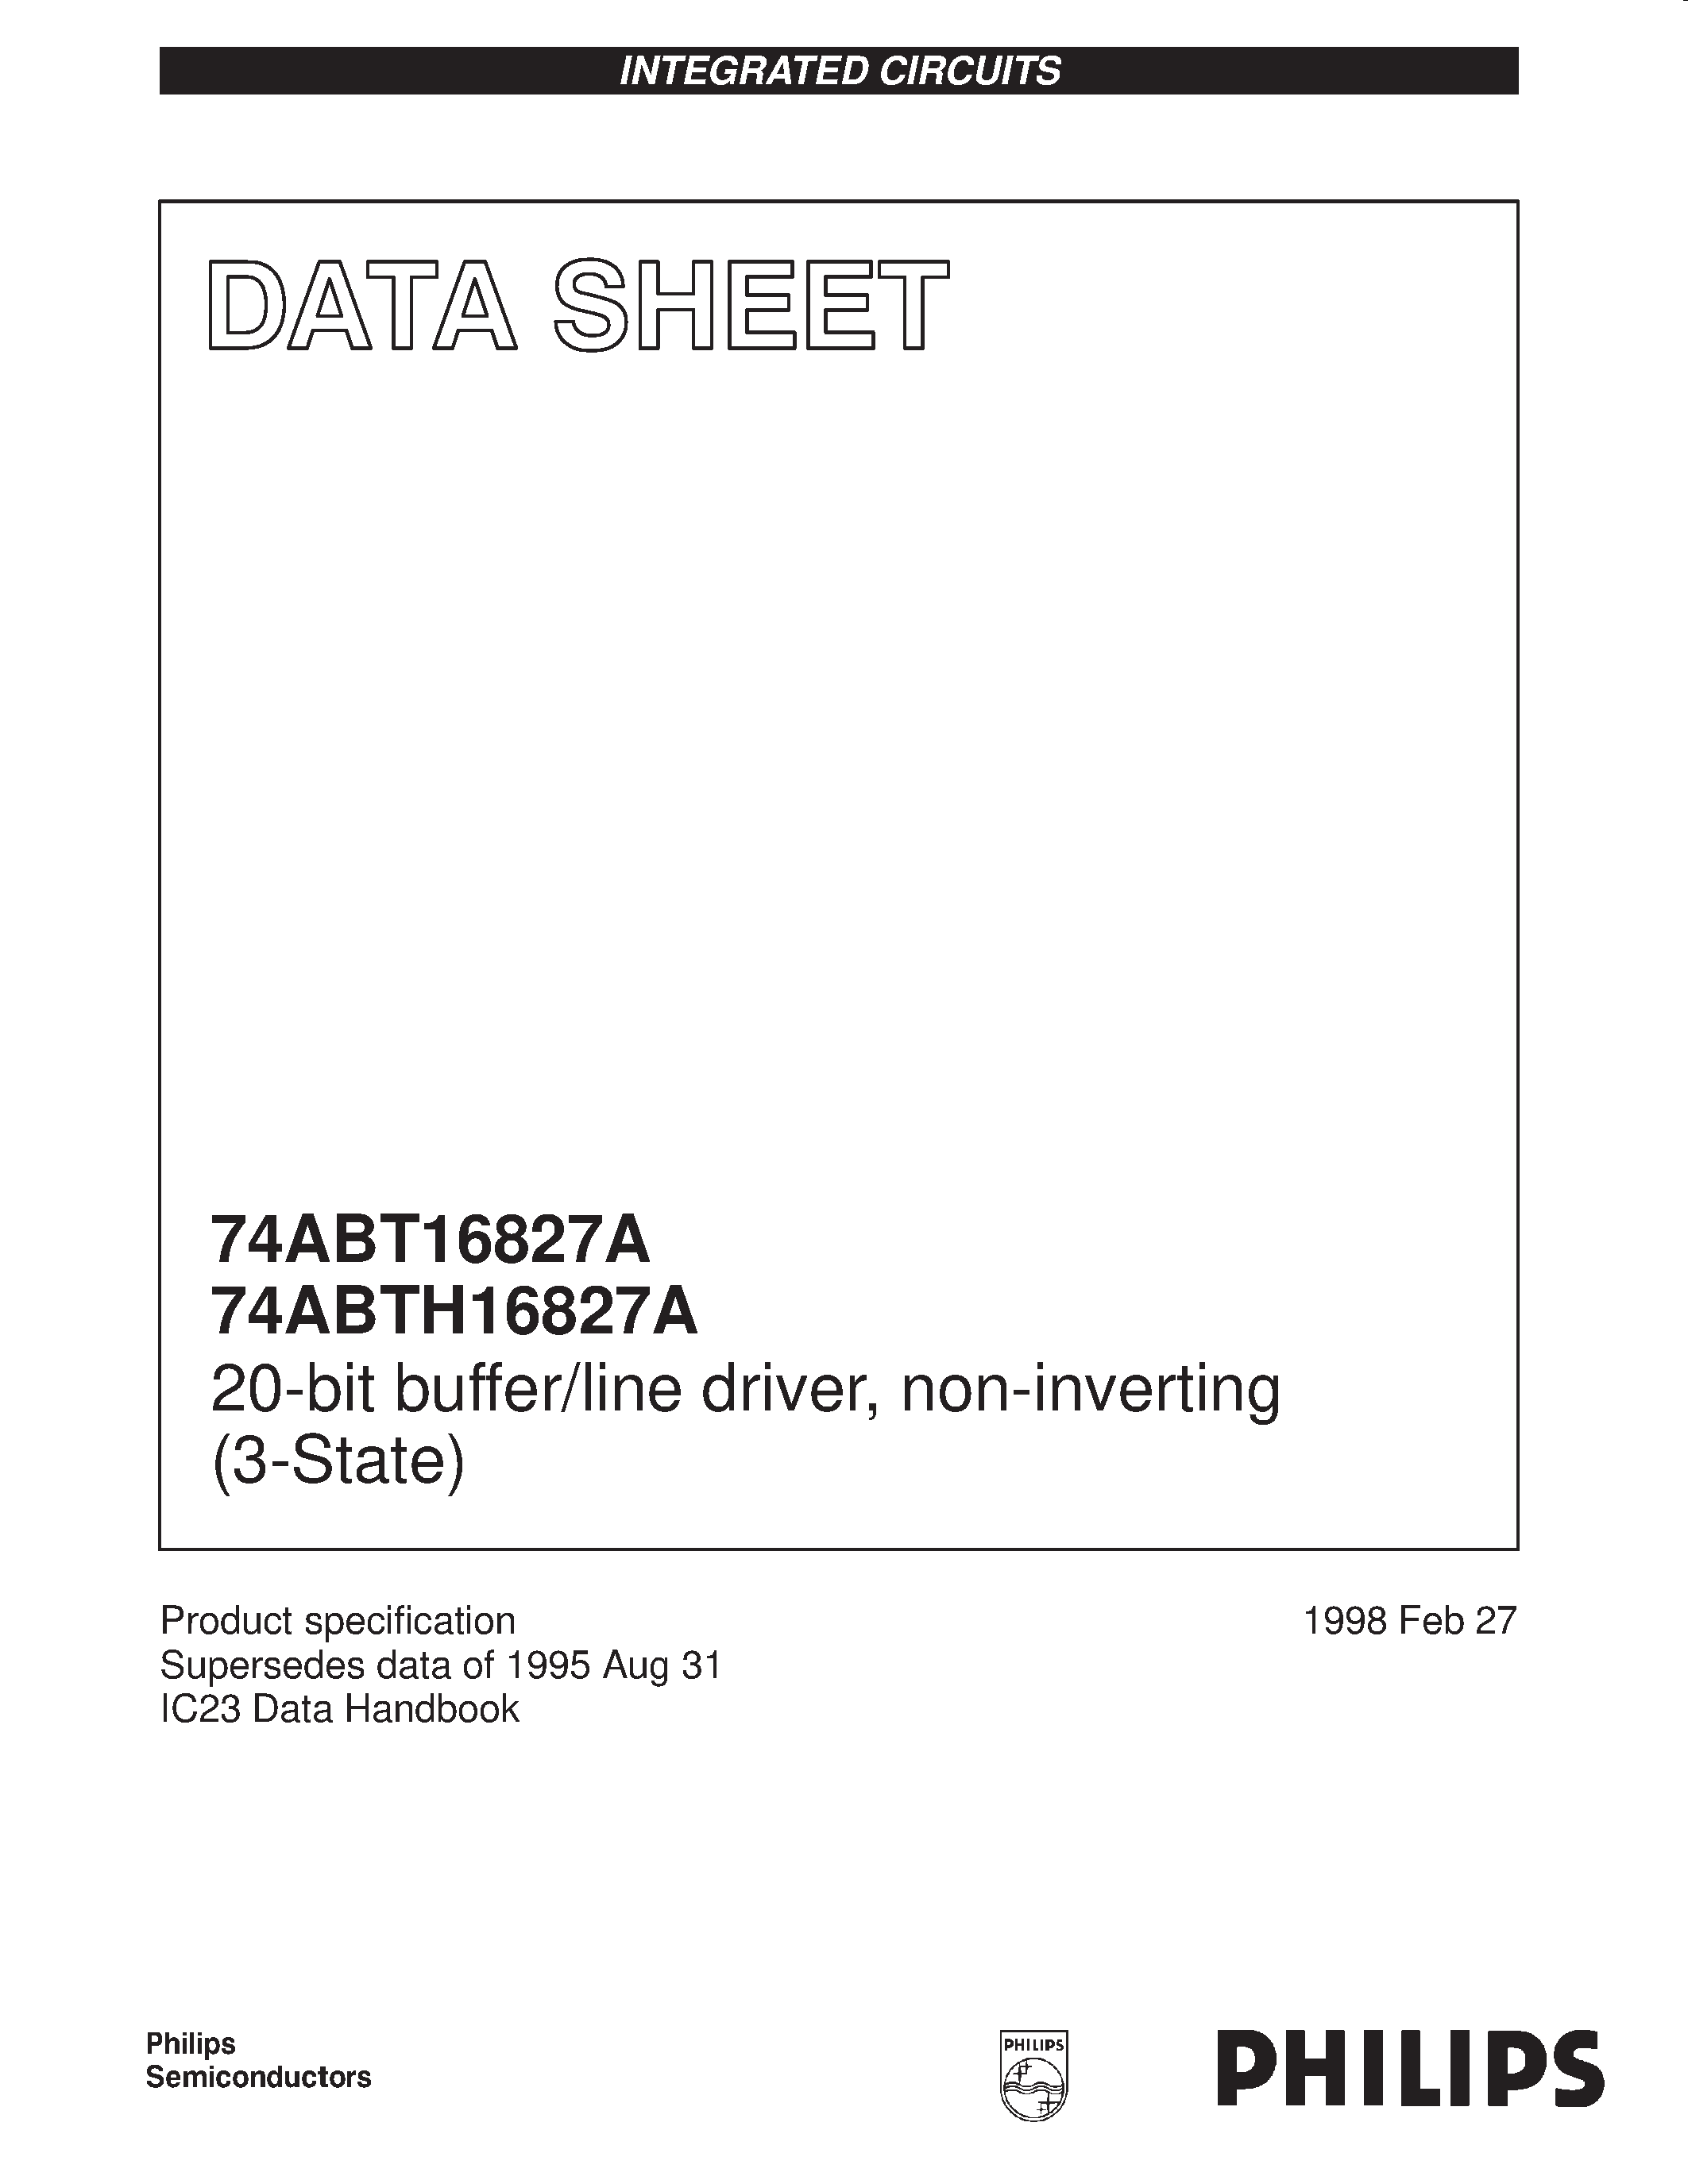 Даташит 74ABTH16827ADGG - 20-bit buffer/line driver/ non-inverting 3-State страница 1